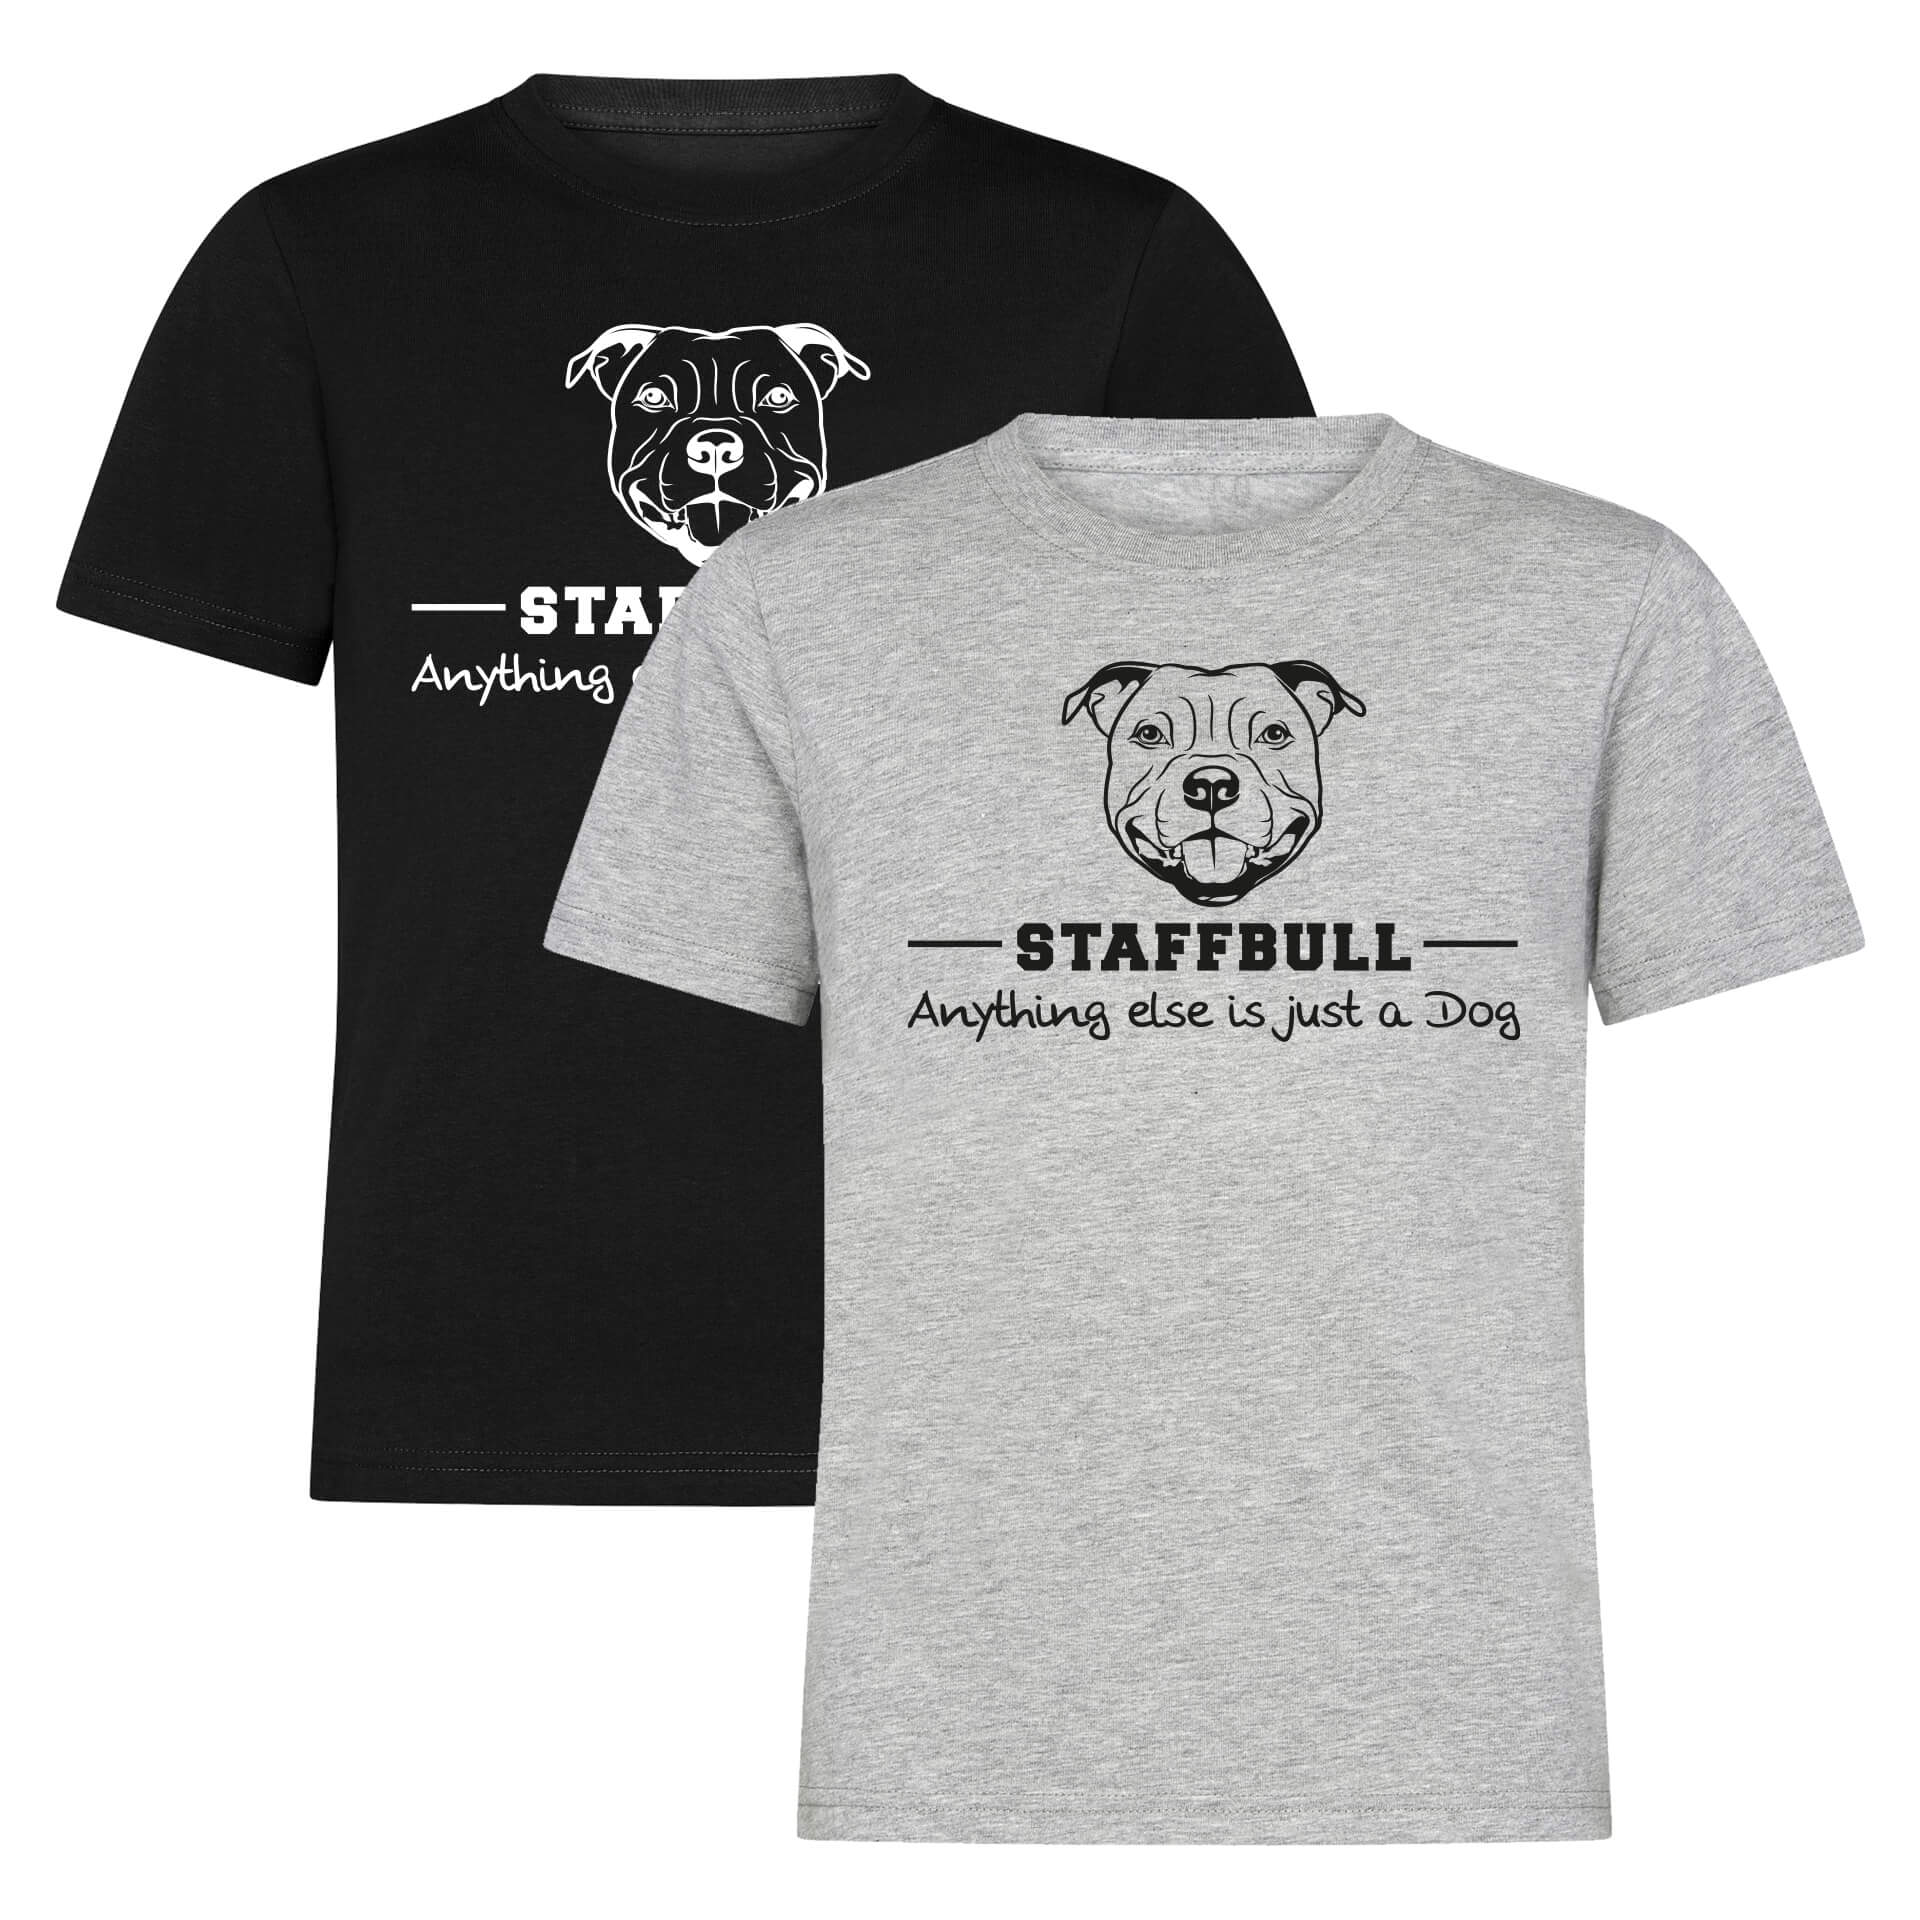 Staffbull T-Shirt Any